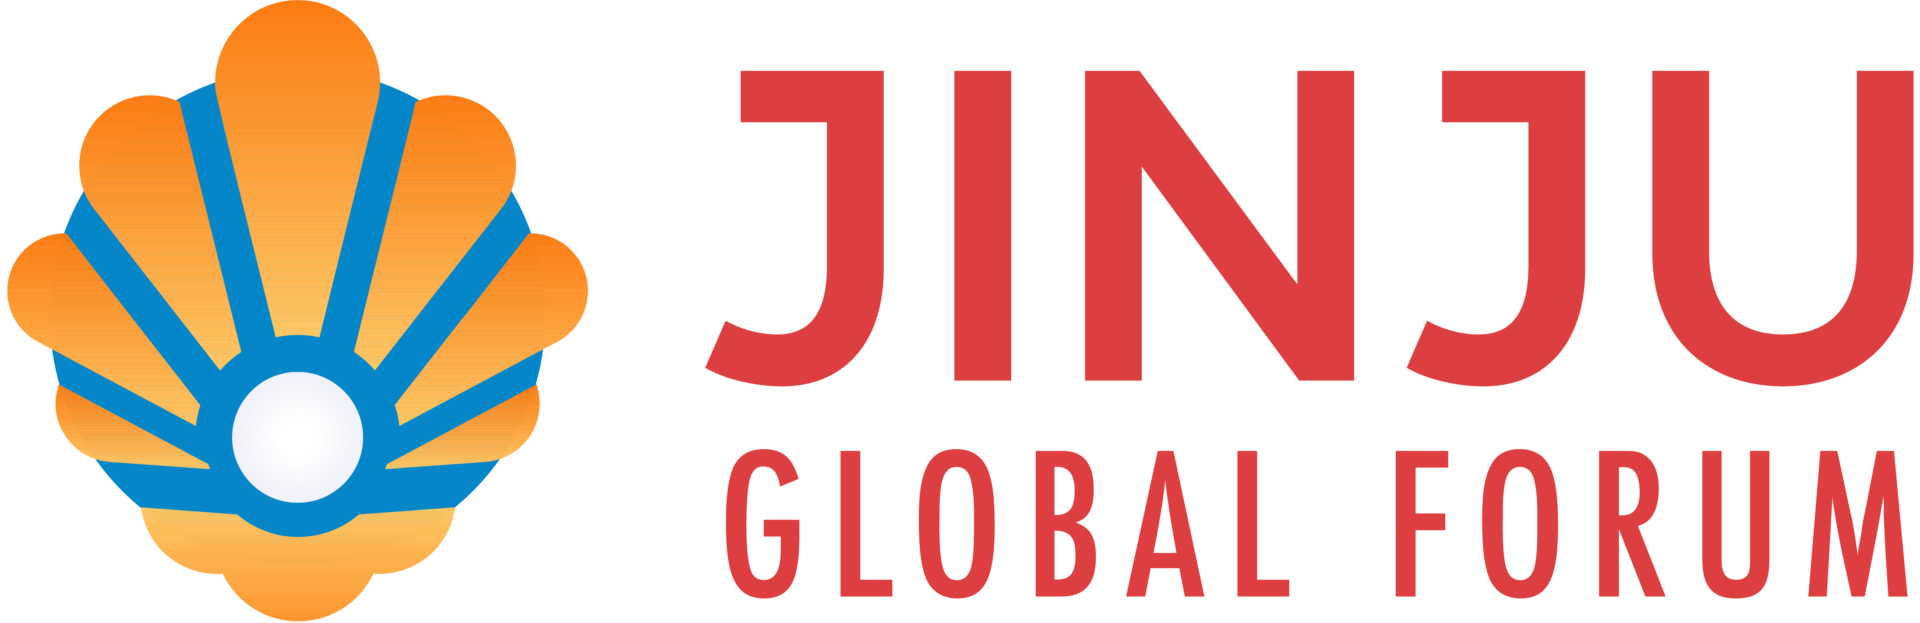 jinju global forum logo